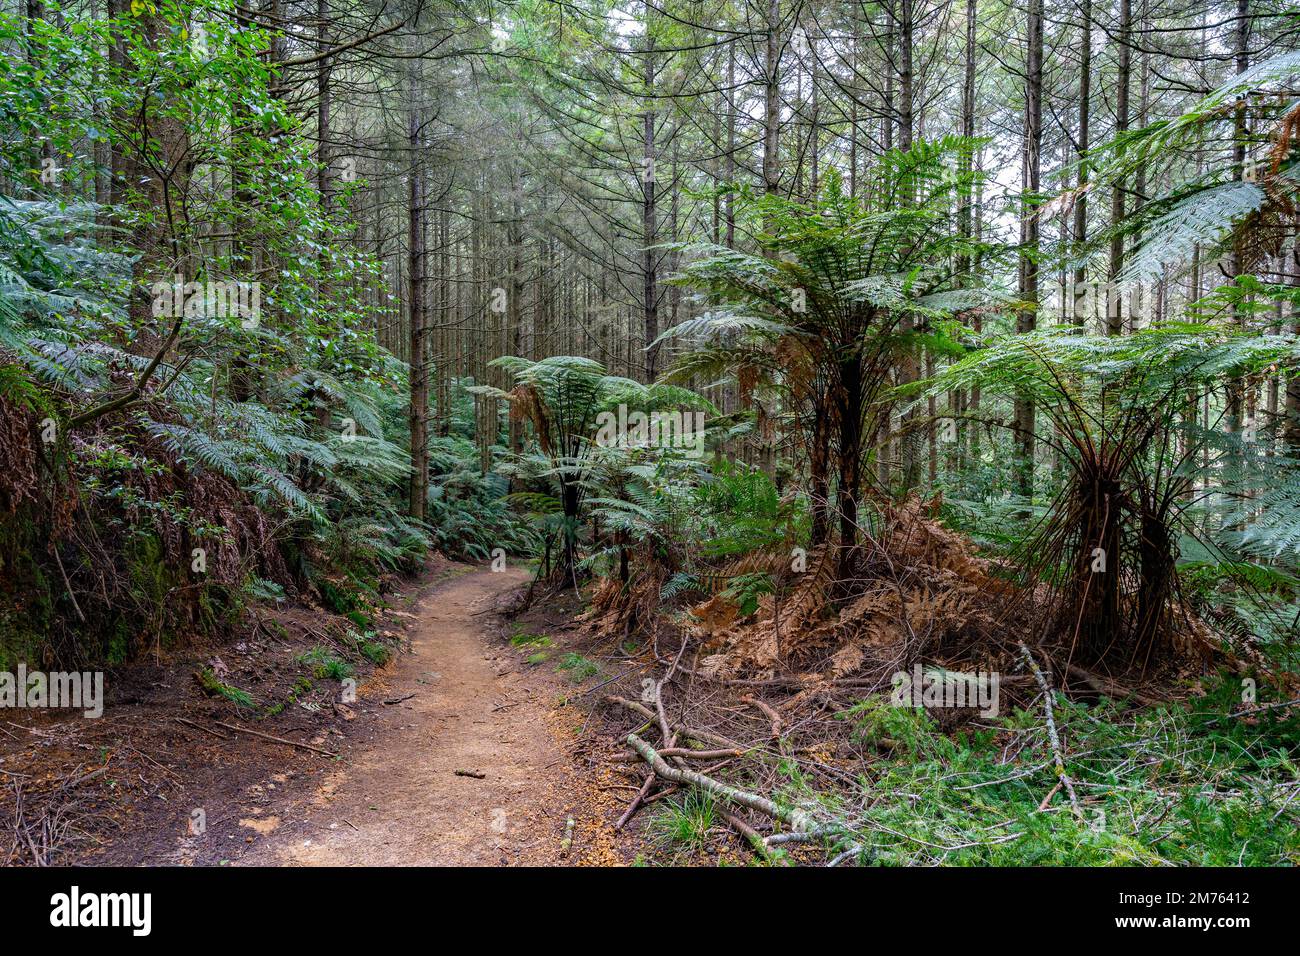 Whakarewarewa forest in Rotorua, New Zealand featuring a collection of Californian Coastal Redwoods Stock Photo